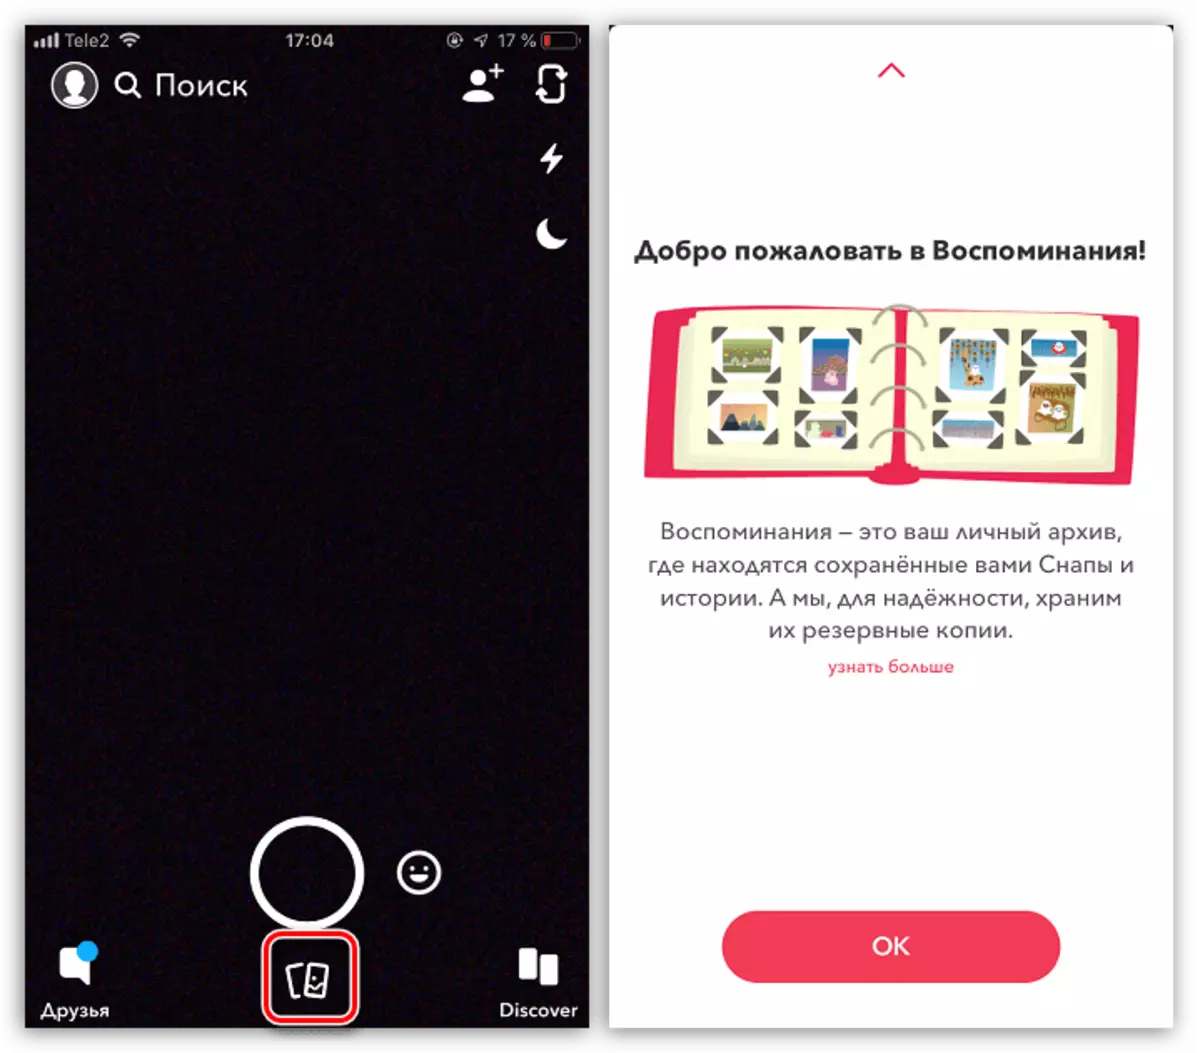 Wona Kuburitsa Archive mune Snapchat application pane iyo iPhone